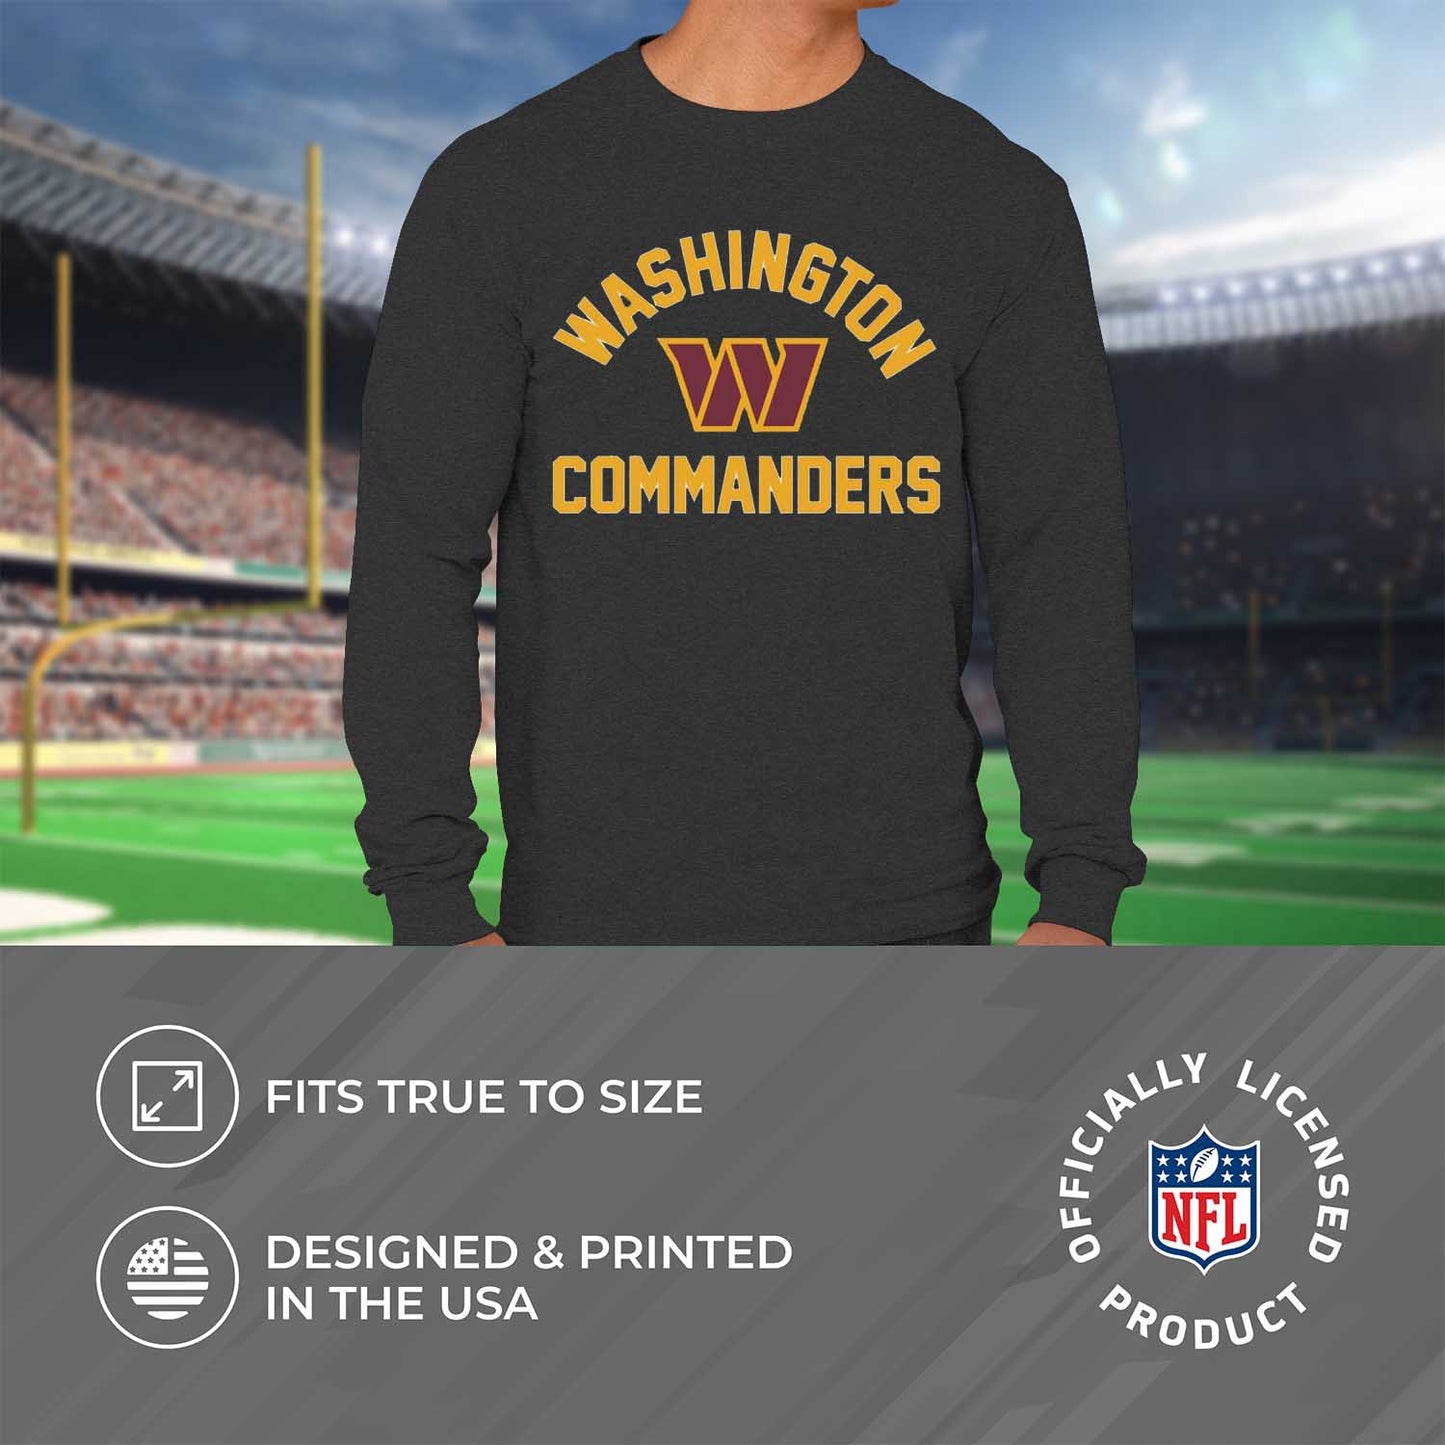 Washington Commanders NFL Gameday Adult Football Long Sleeve Shirt - Charcoal